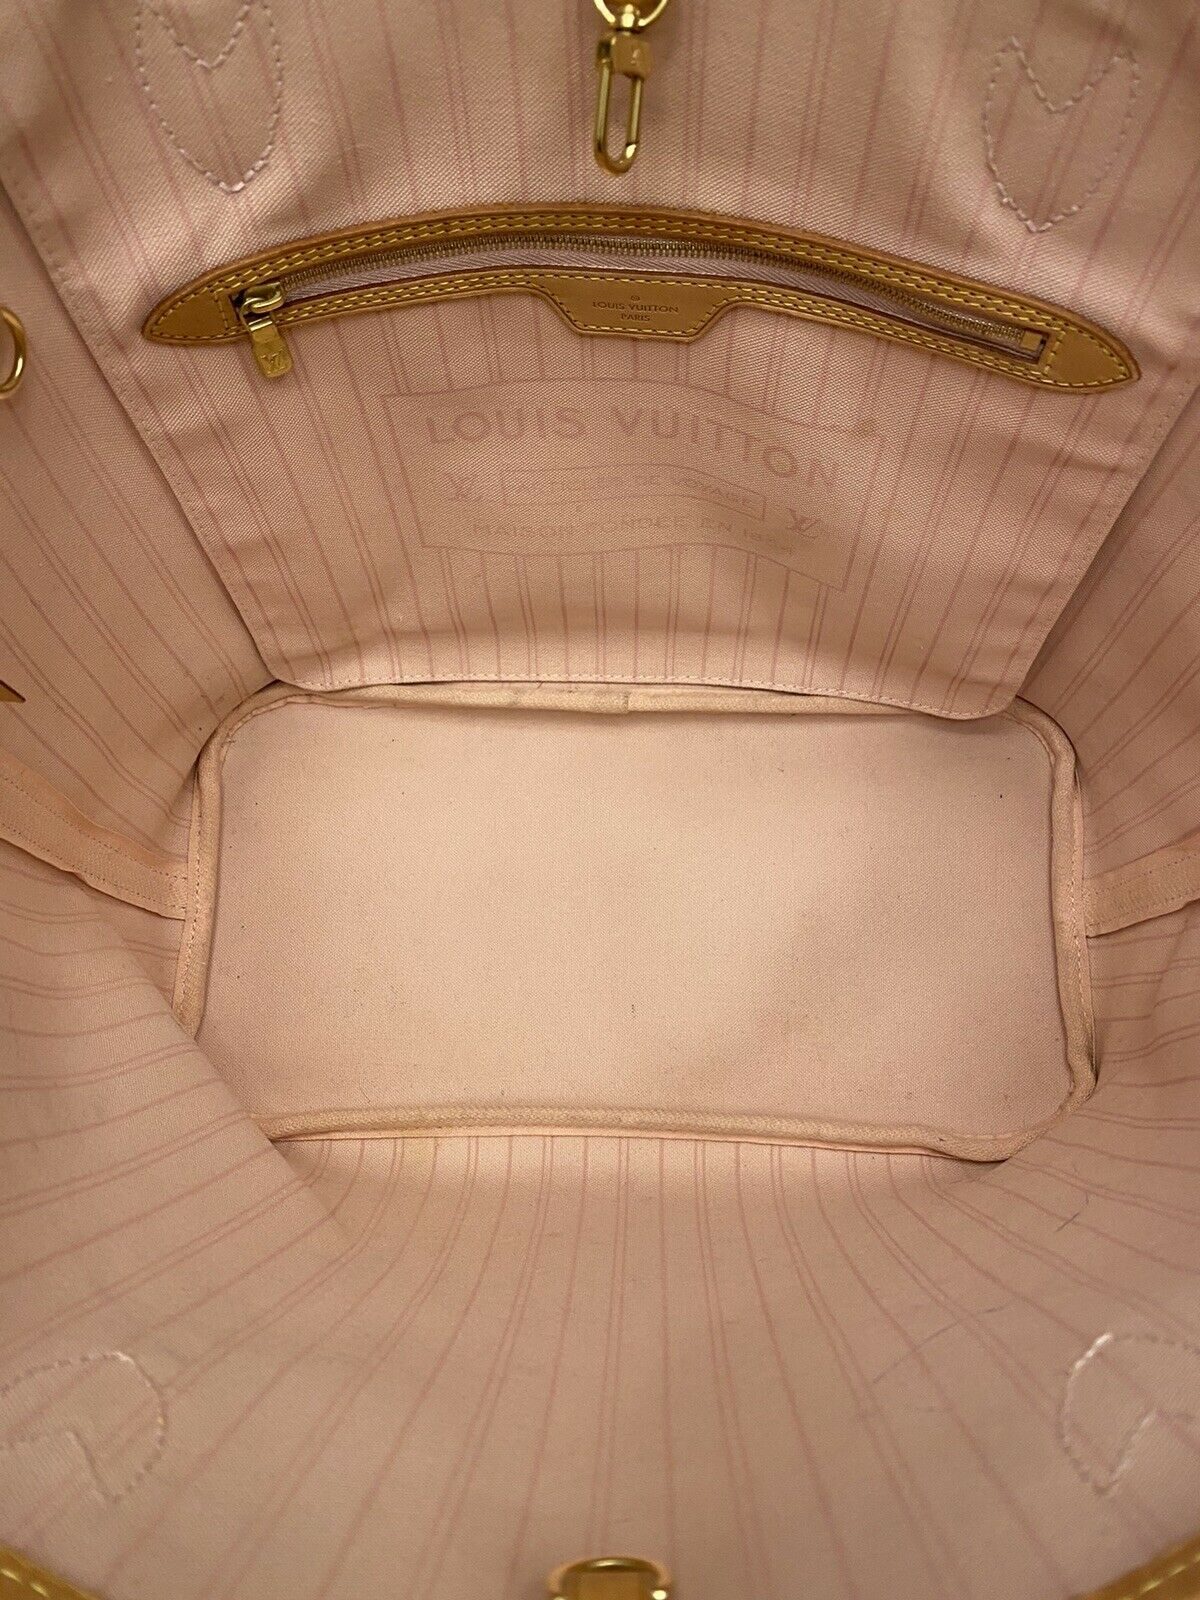 Louis Vuitton Neverfull MM Damier Azur Rose Ballerine Tote (SD0149